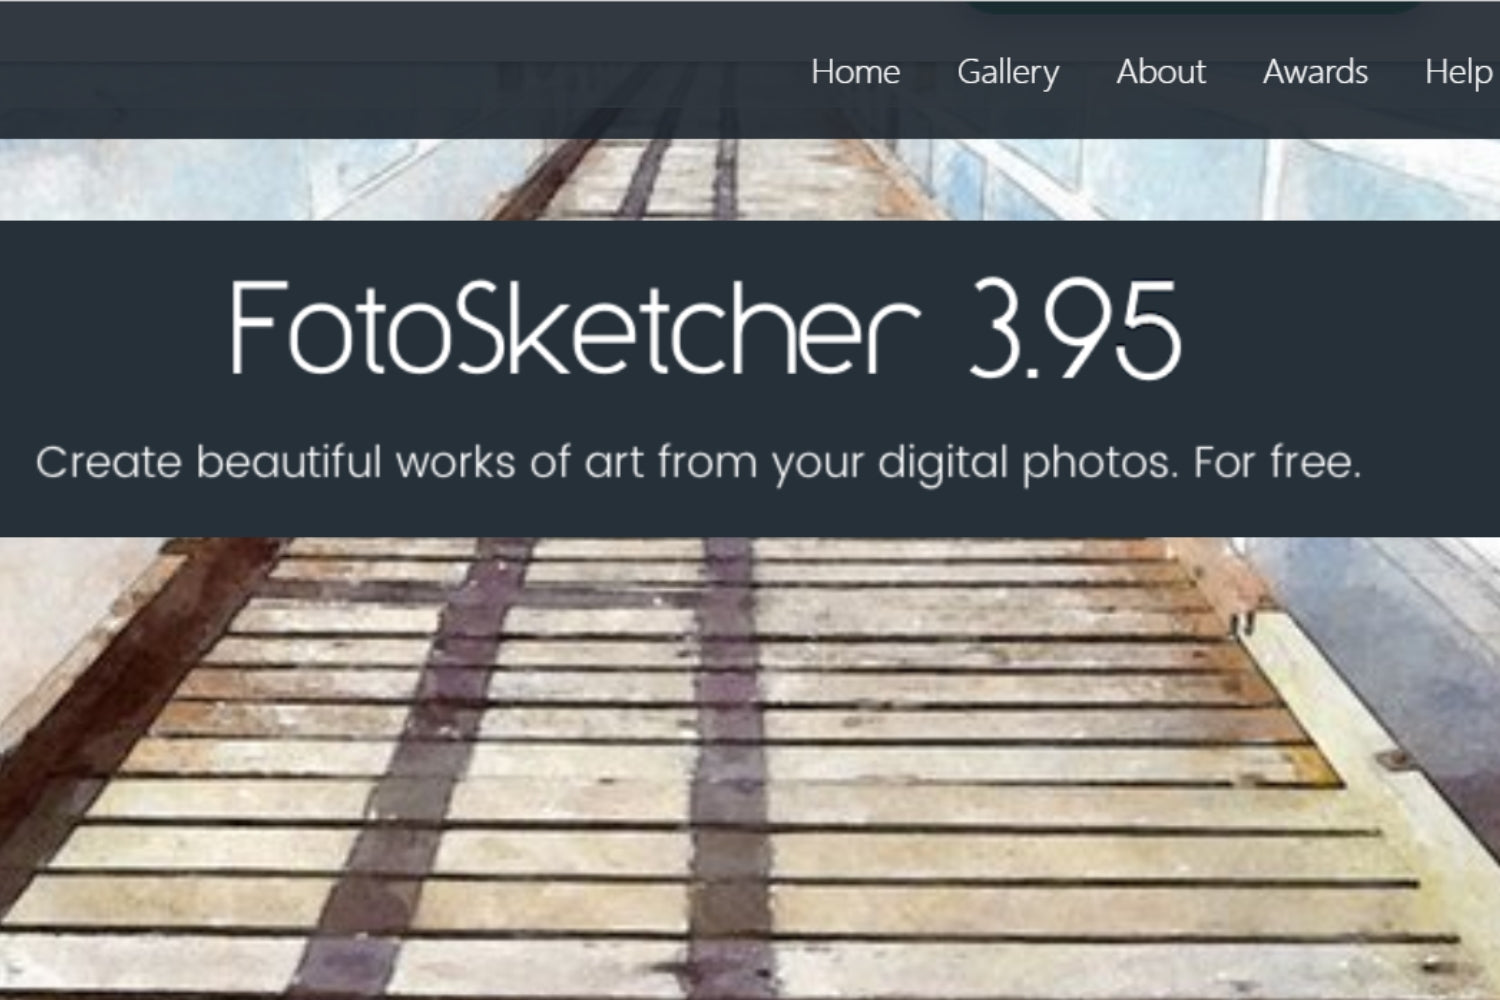 The interface of Fotosketcher website